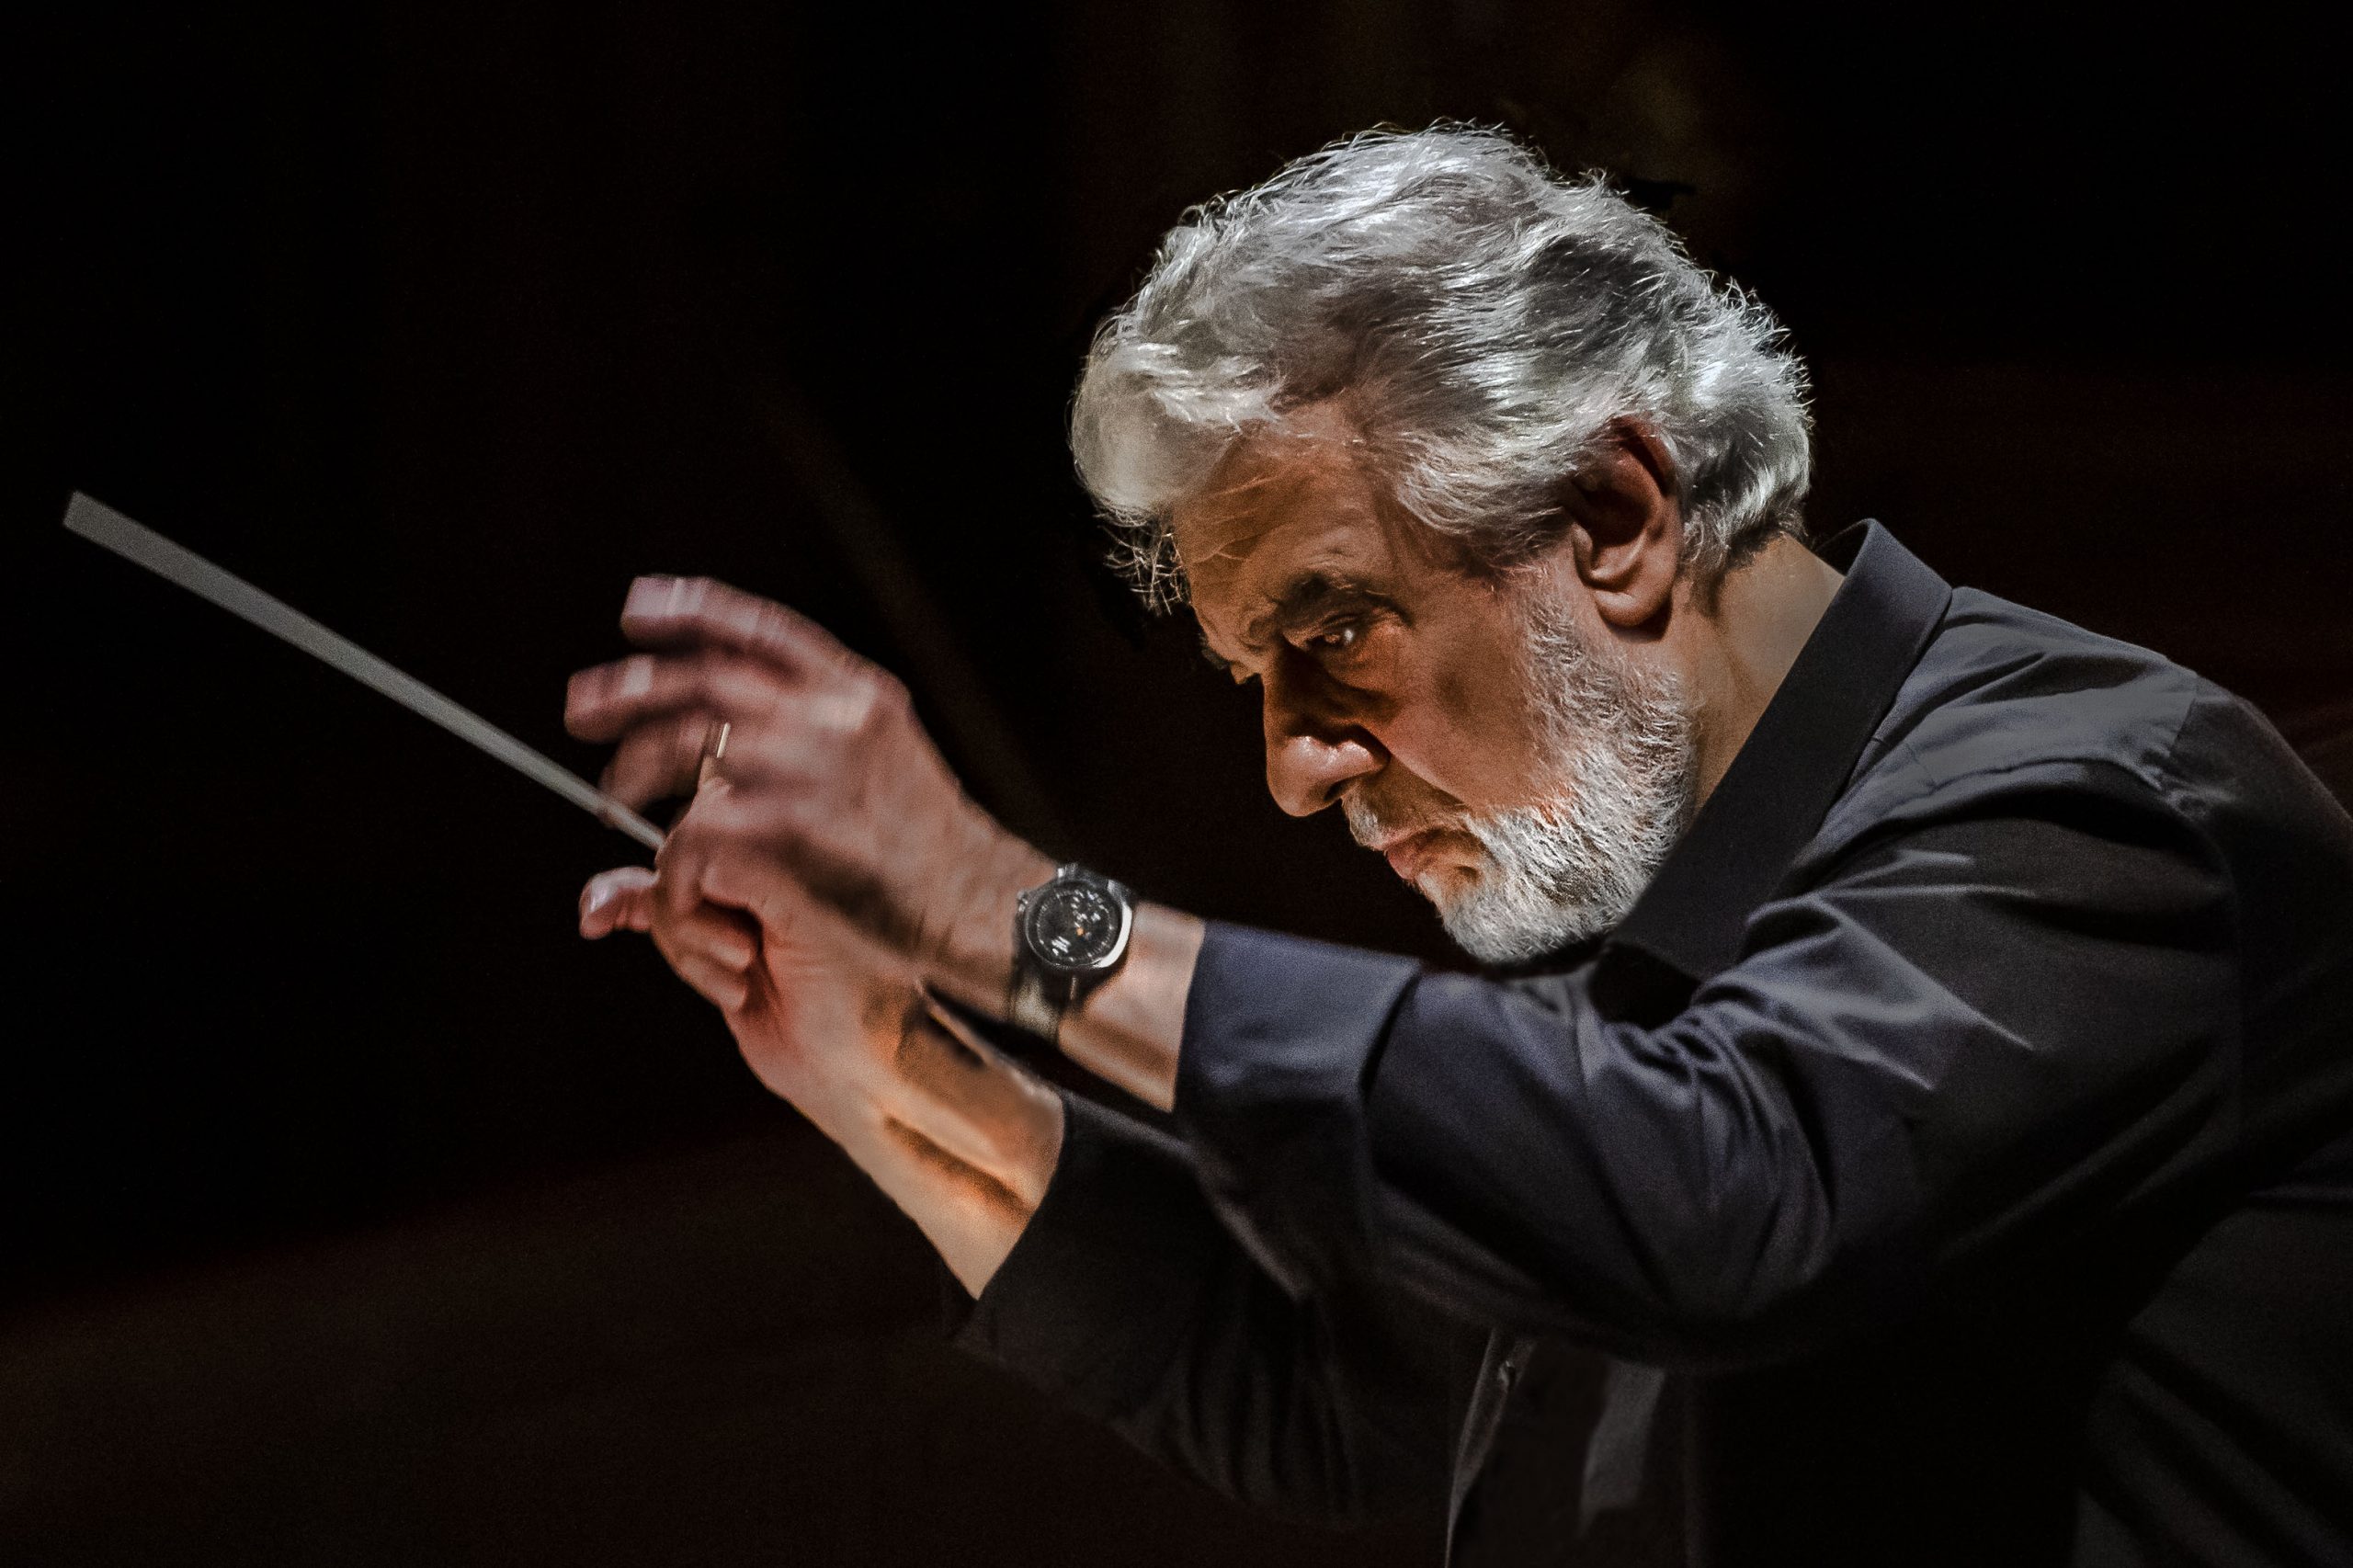 Teatro Massimo: 1 marzo, Placido Domingo dirige “Noche Española”